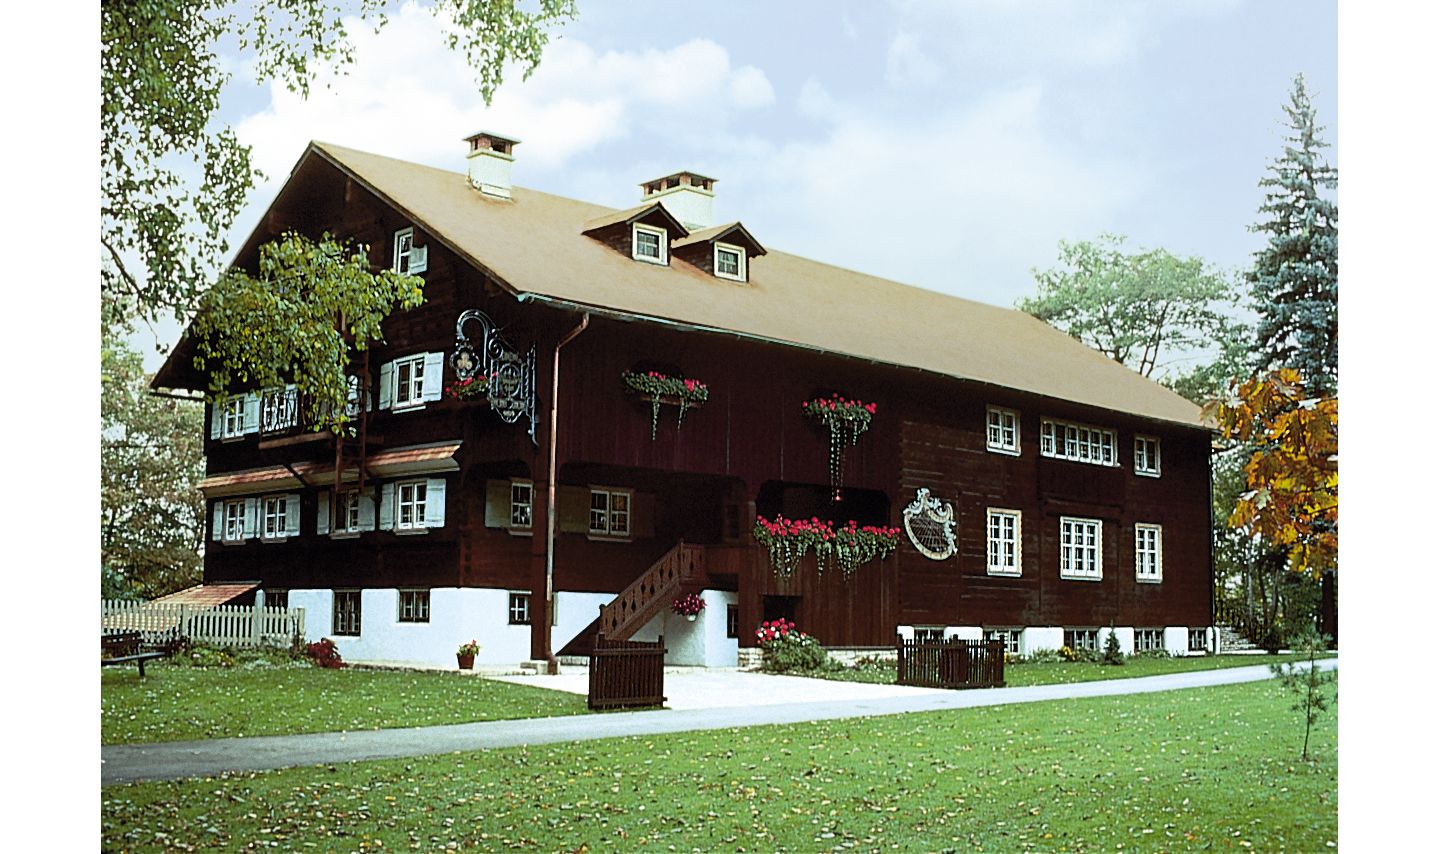 The Waelderhaus in Kohler